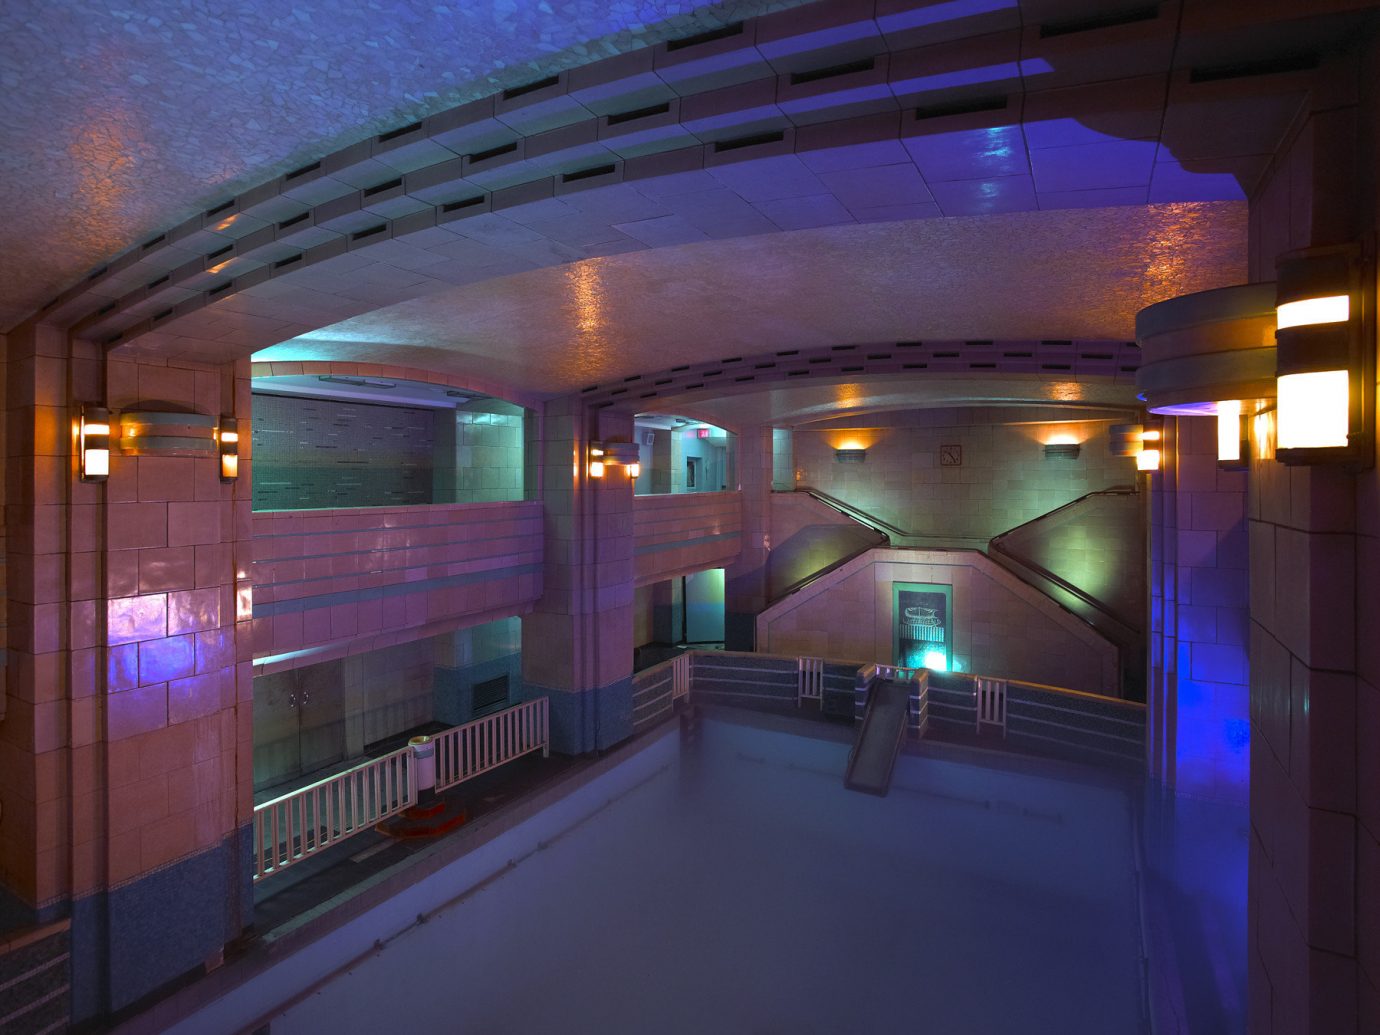 Hotels building ceiling light night lighting swimming pool interior design platform subway